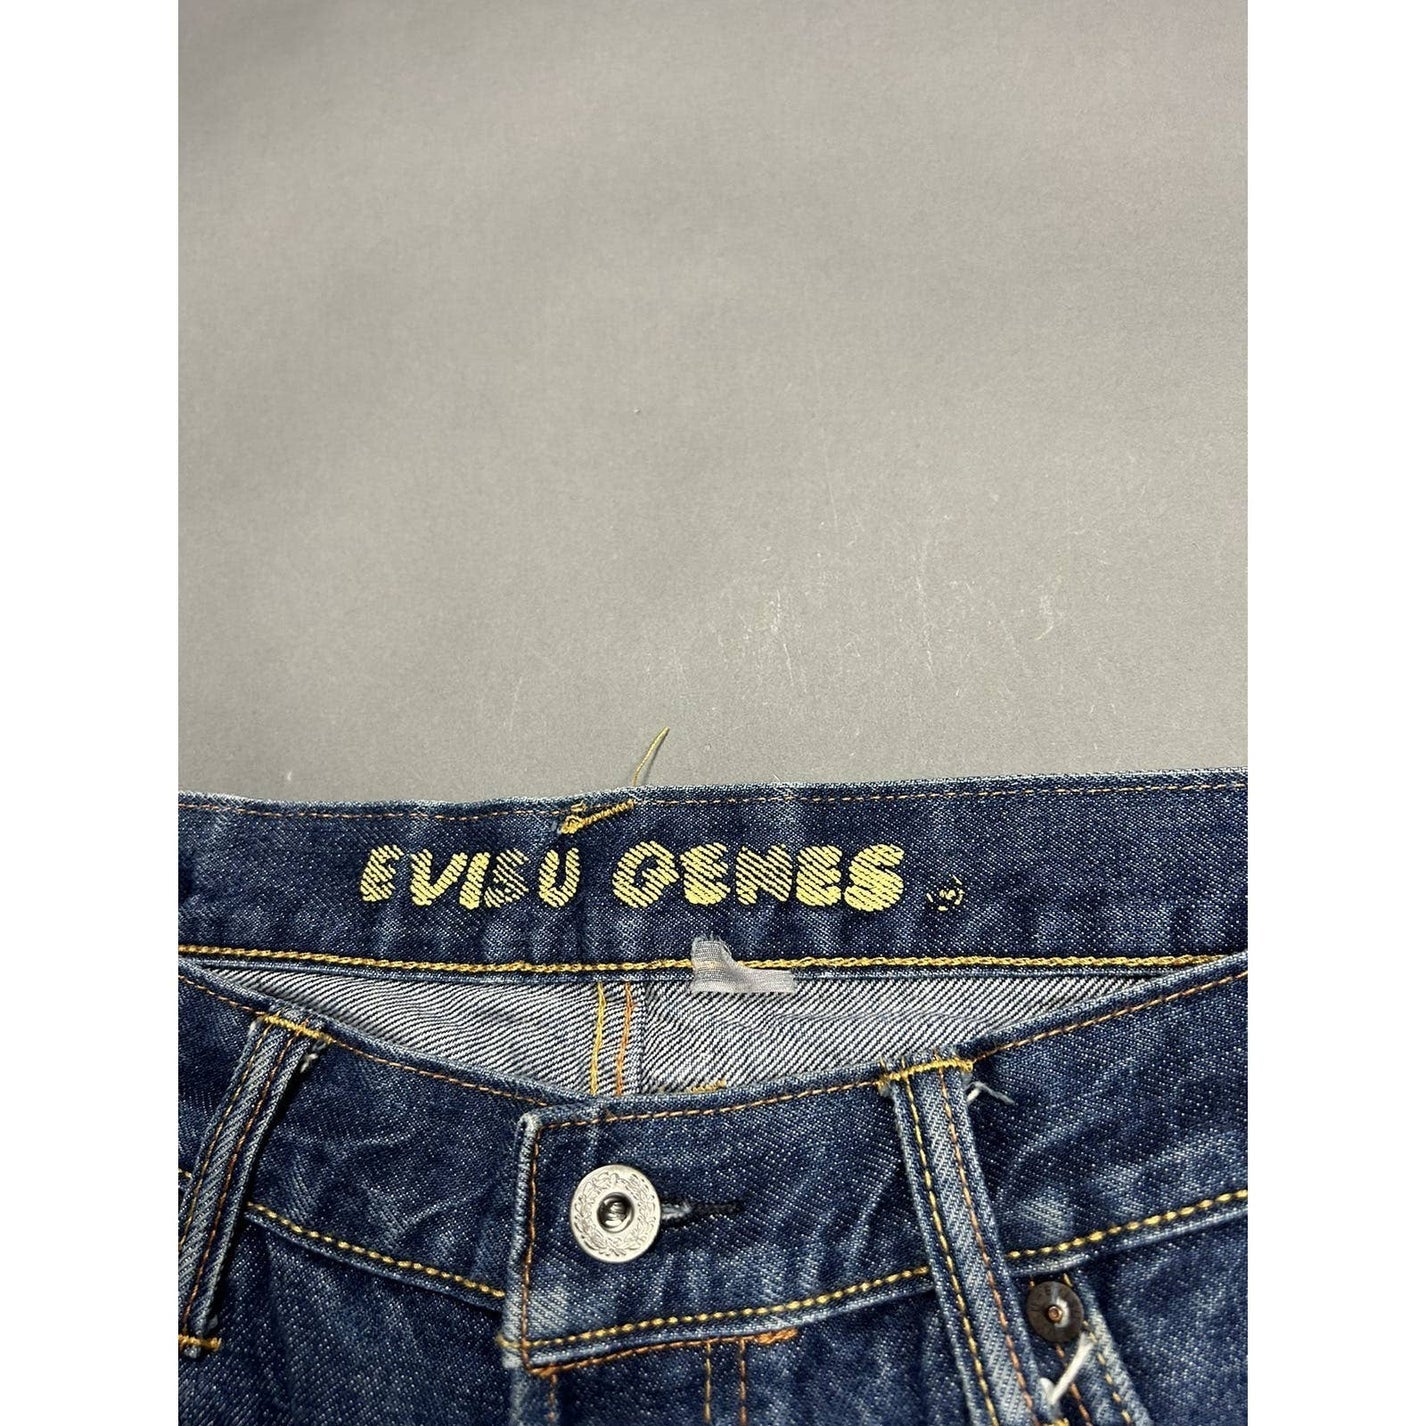 Evisu Jeans Vintage Selvedge Denim Navy White Seagulls Genes Lodz Polska pas1